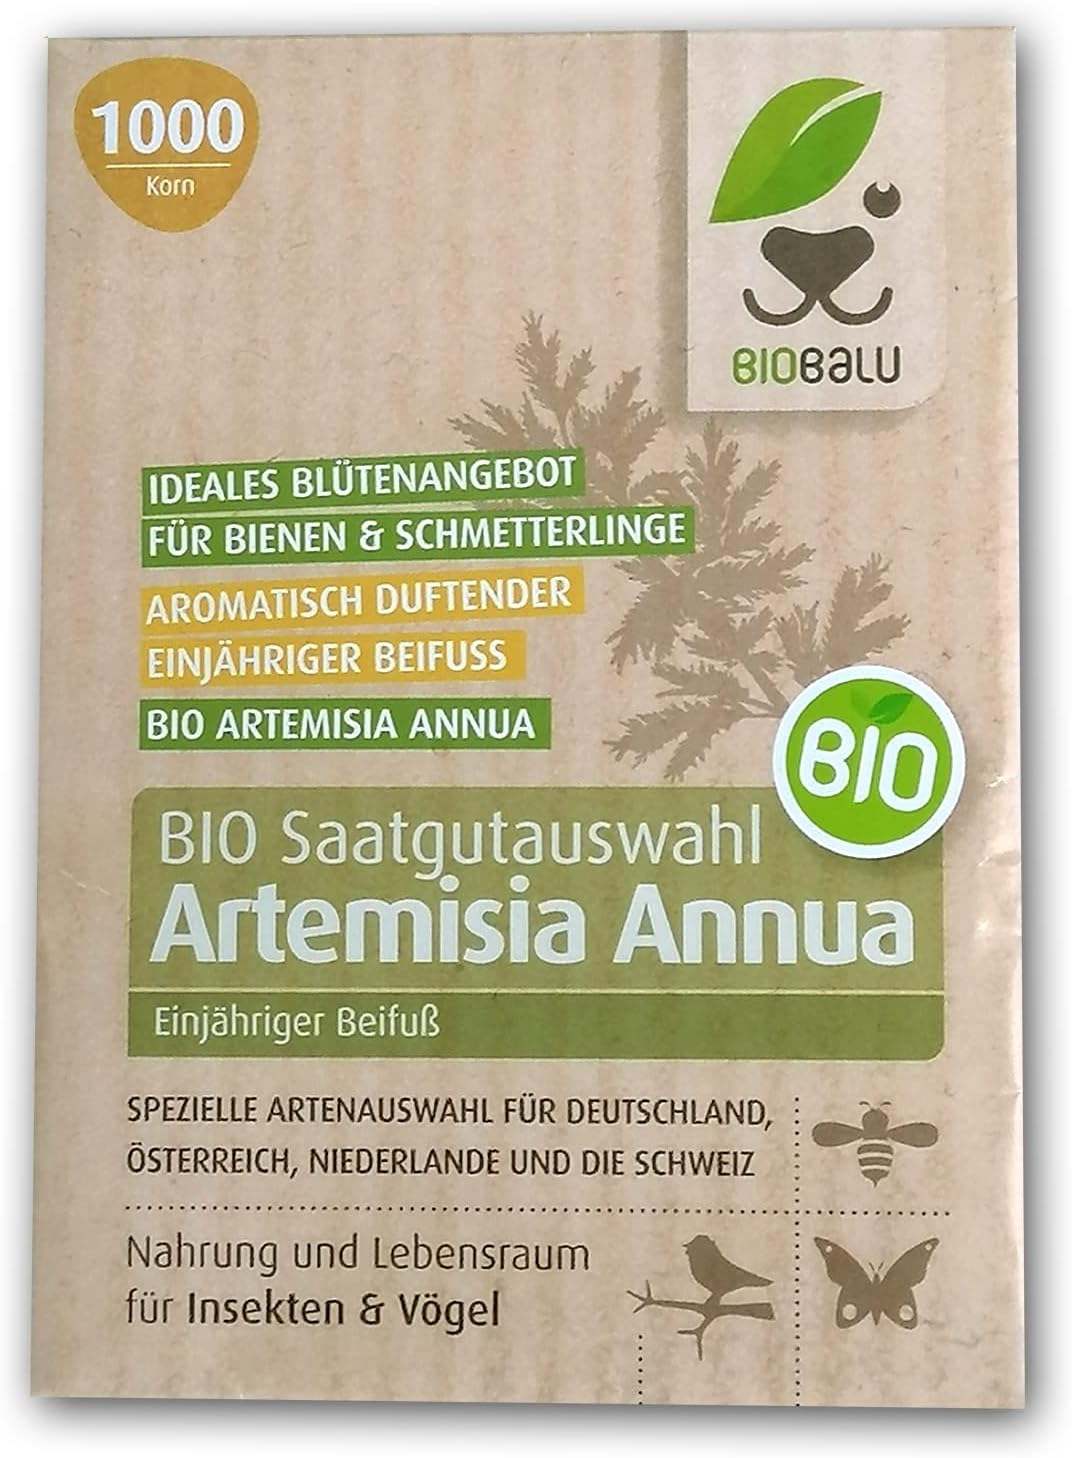 Biobalu Bio Artemisia Annua Saatgut aus Demeter Anbau